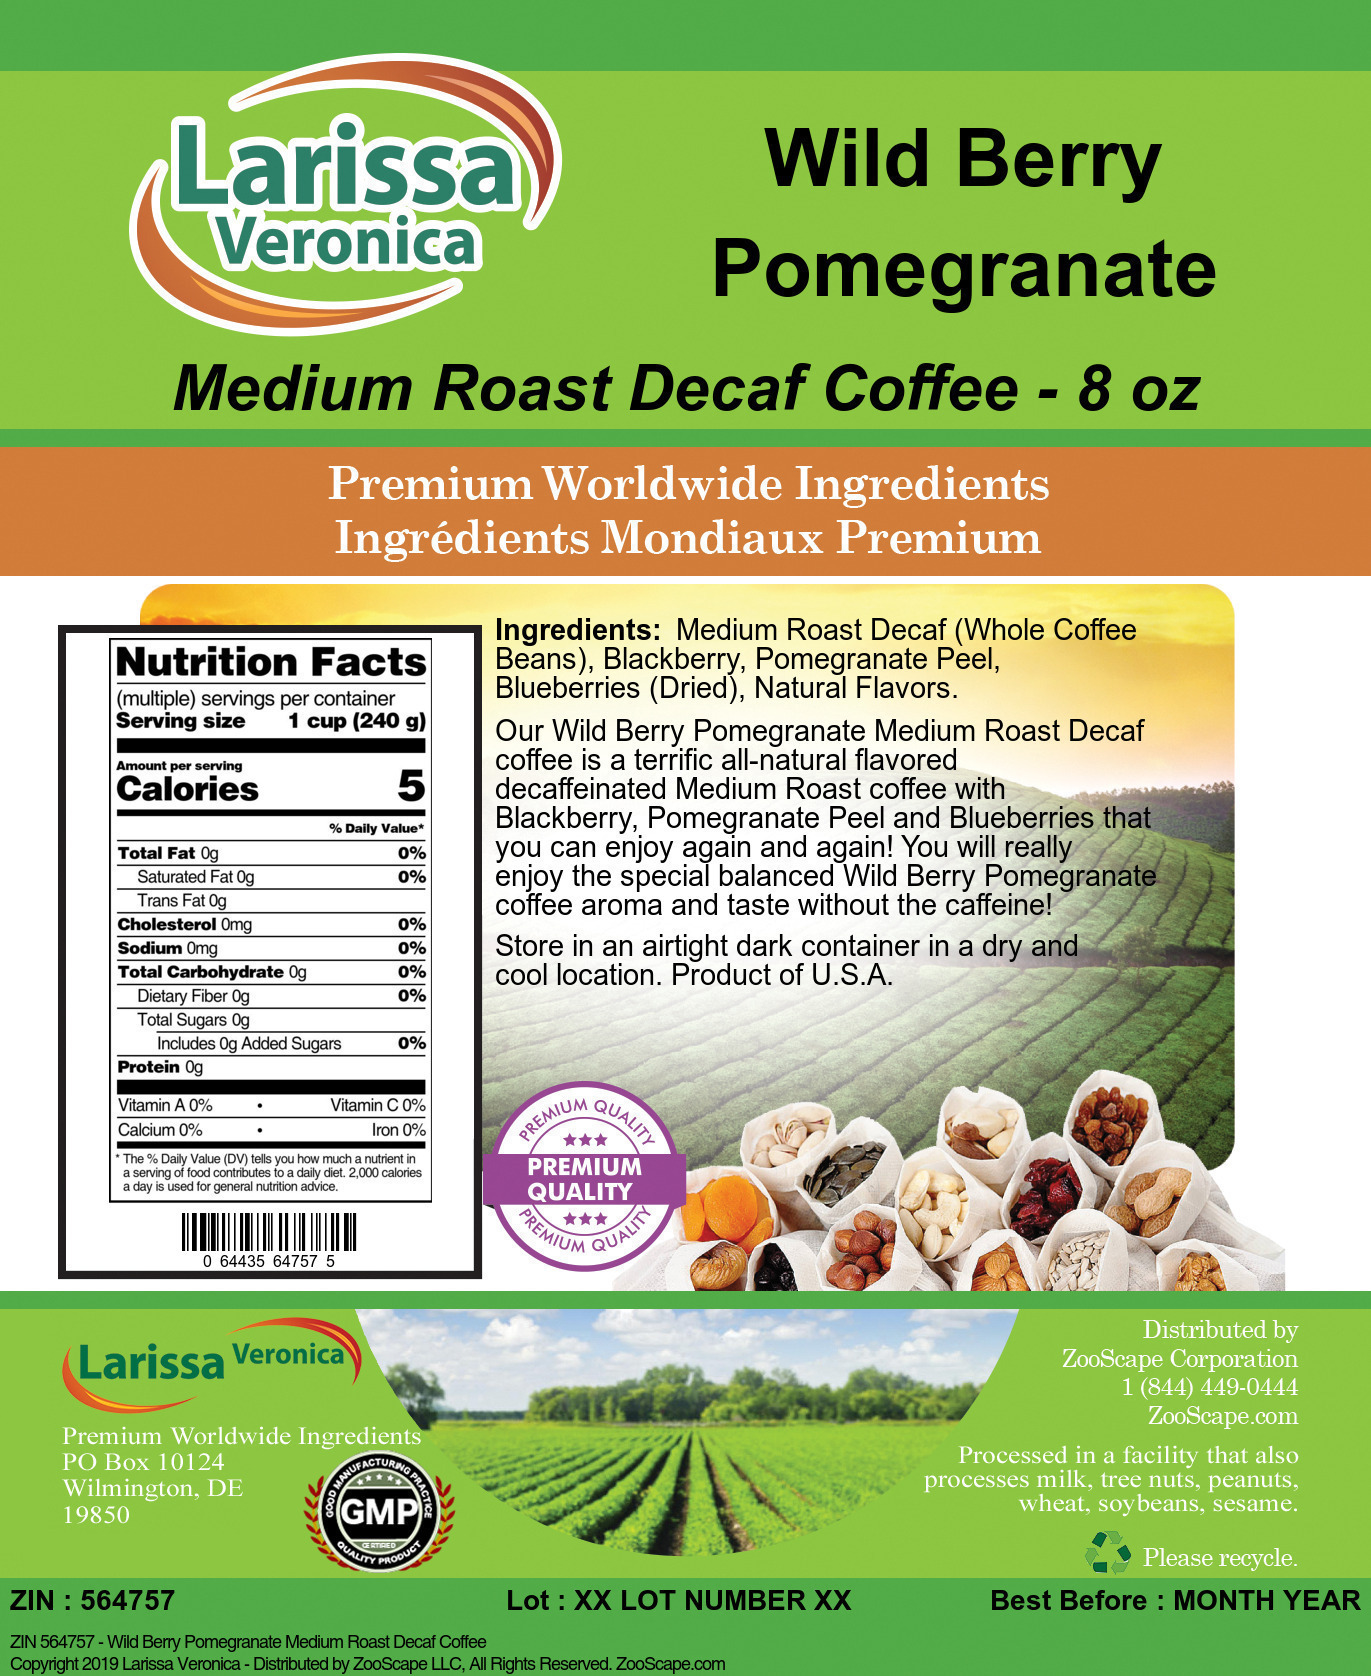 Wild Berry Pomegranate Medium Roast Decaf Coffee - Label